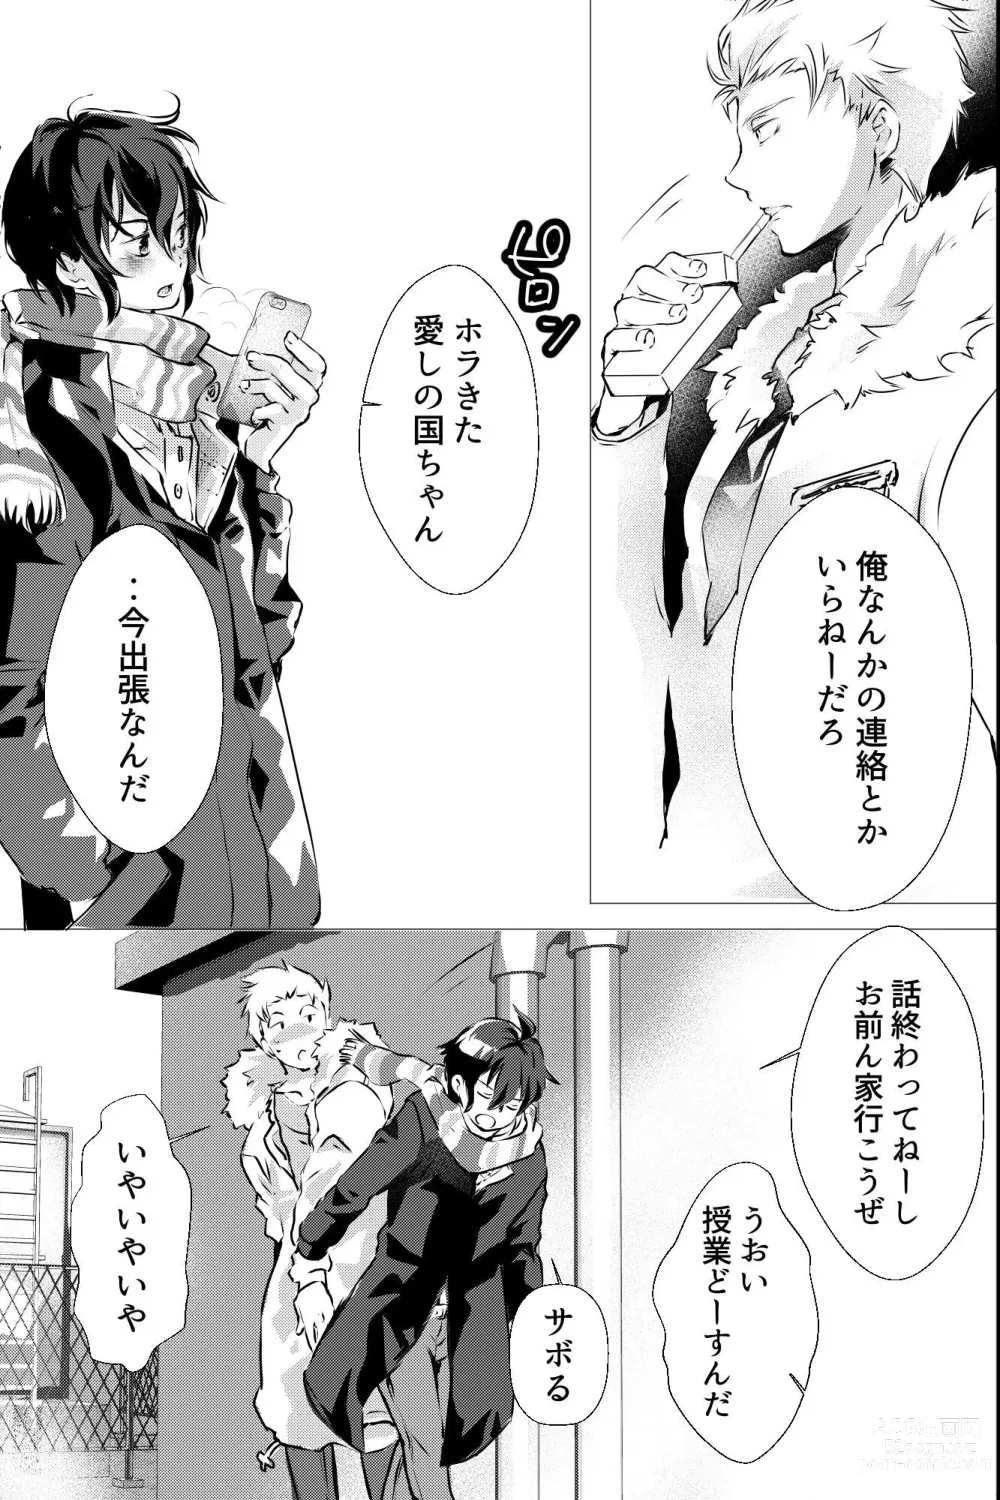 Page 8 of doujinshi 俺しか知らない親友のカオ。媚薬を親友に盛られたら